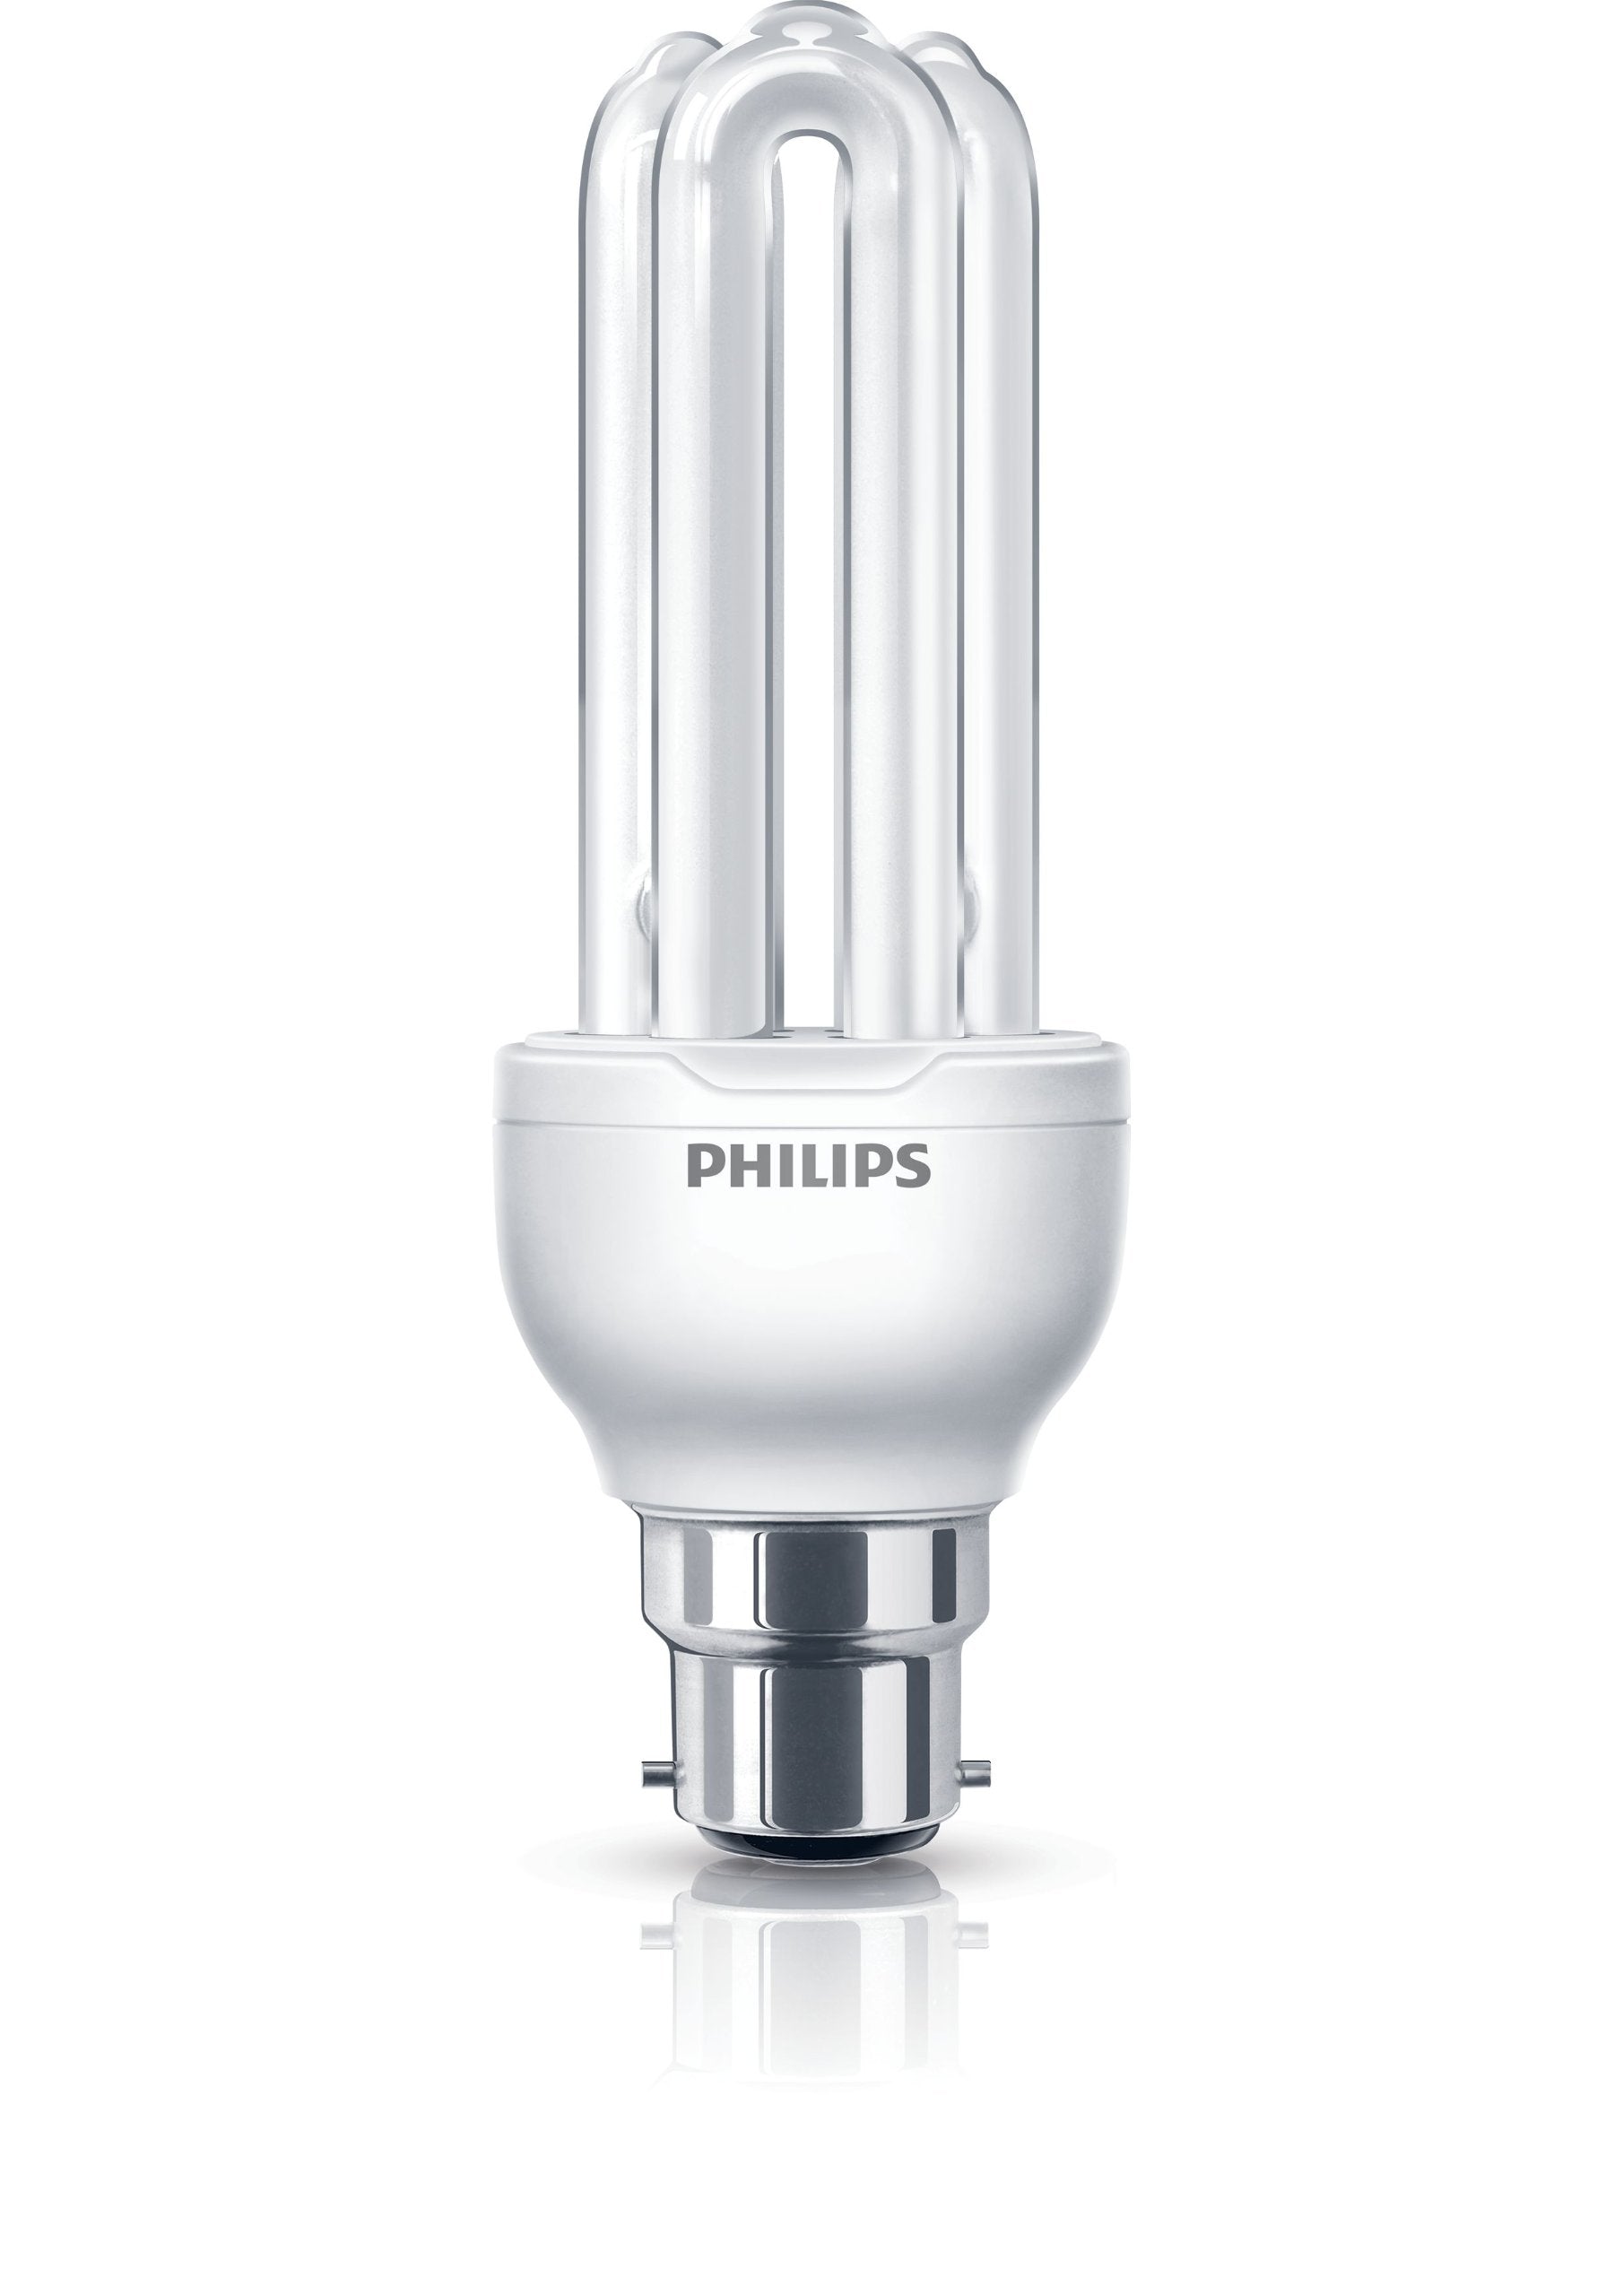 Philips Economy Compact Stick Light Bulb (B22 Bayonet Cap), 18 W - Fluorescent